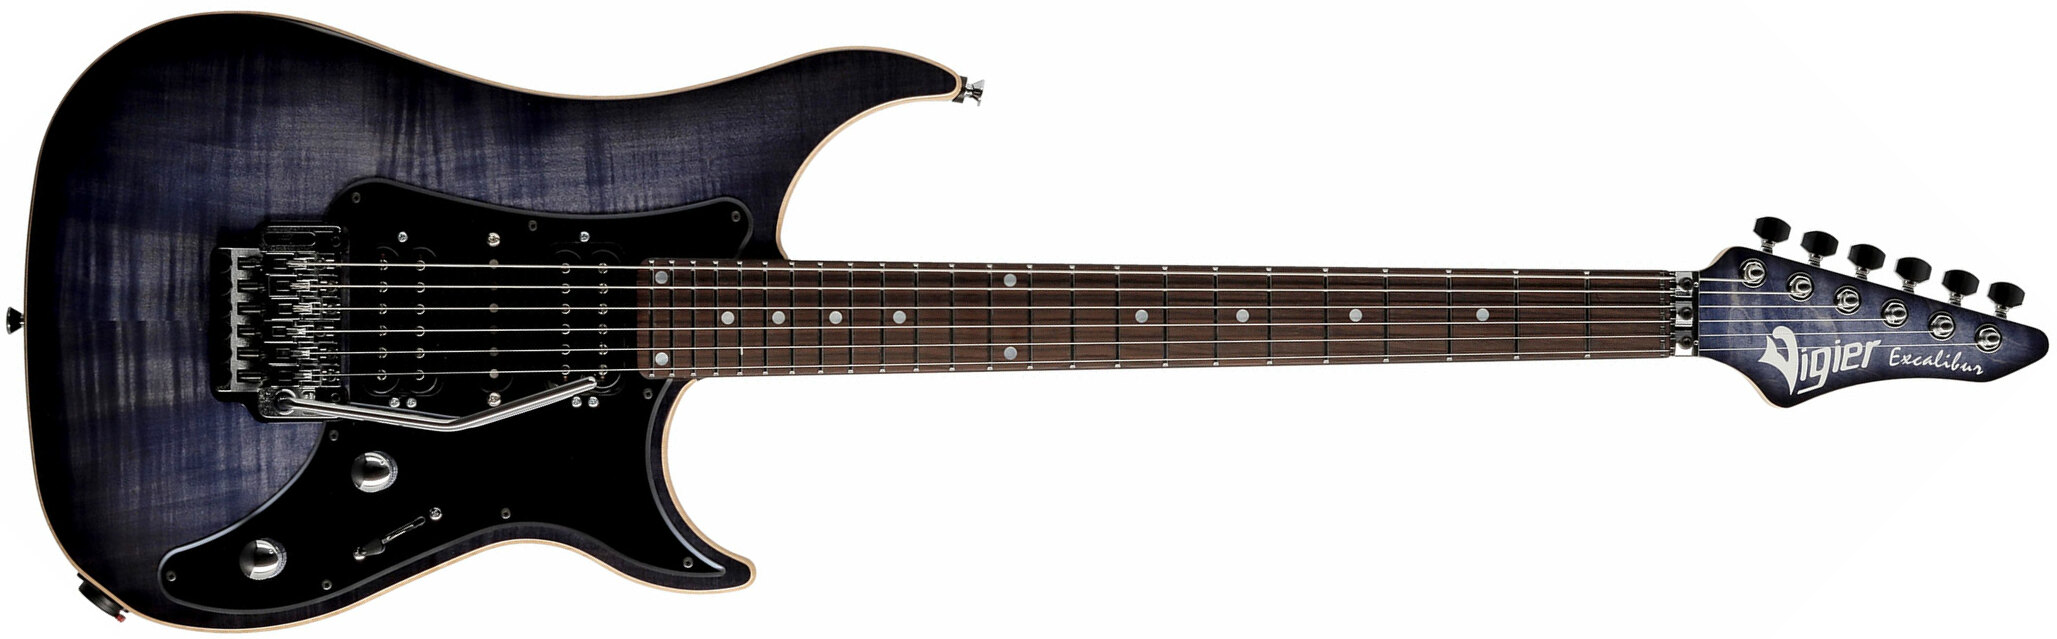 Vigier Excalibur Custom Hsh Fr Rw - Deep Deep Blue - Str shape electric guitar - Main picture